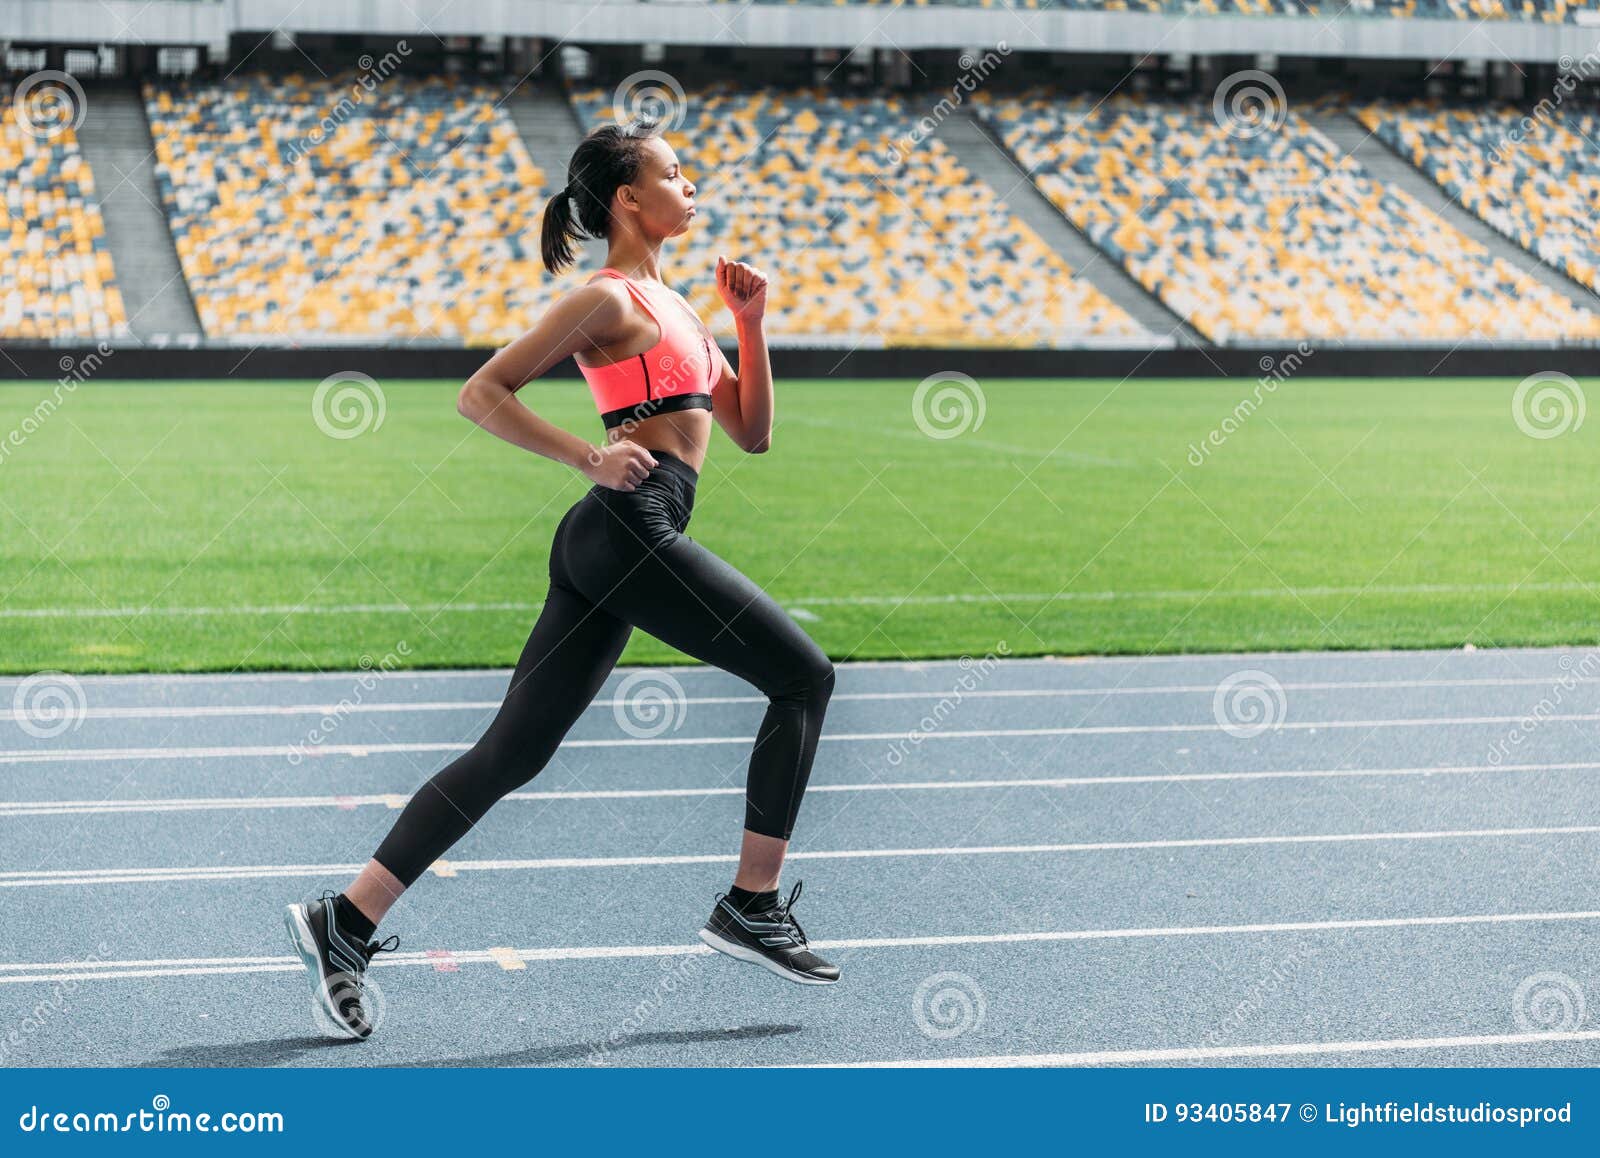 Женщина на стадионе. Фотосессии на стадионе бег. Спортивный бег на стадионе девушка. Фотосессия на беговой дорожке на стадионе. Фото на стадионе девушки.